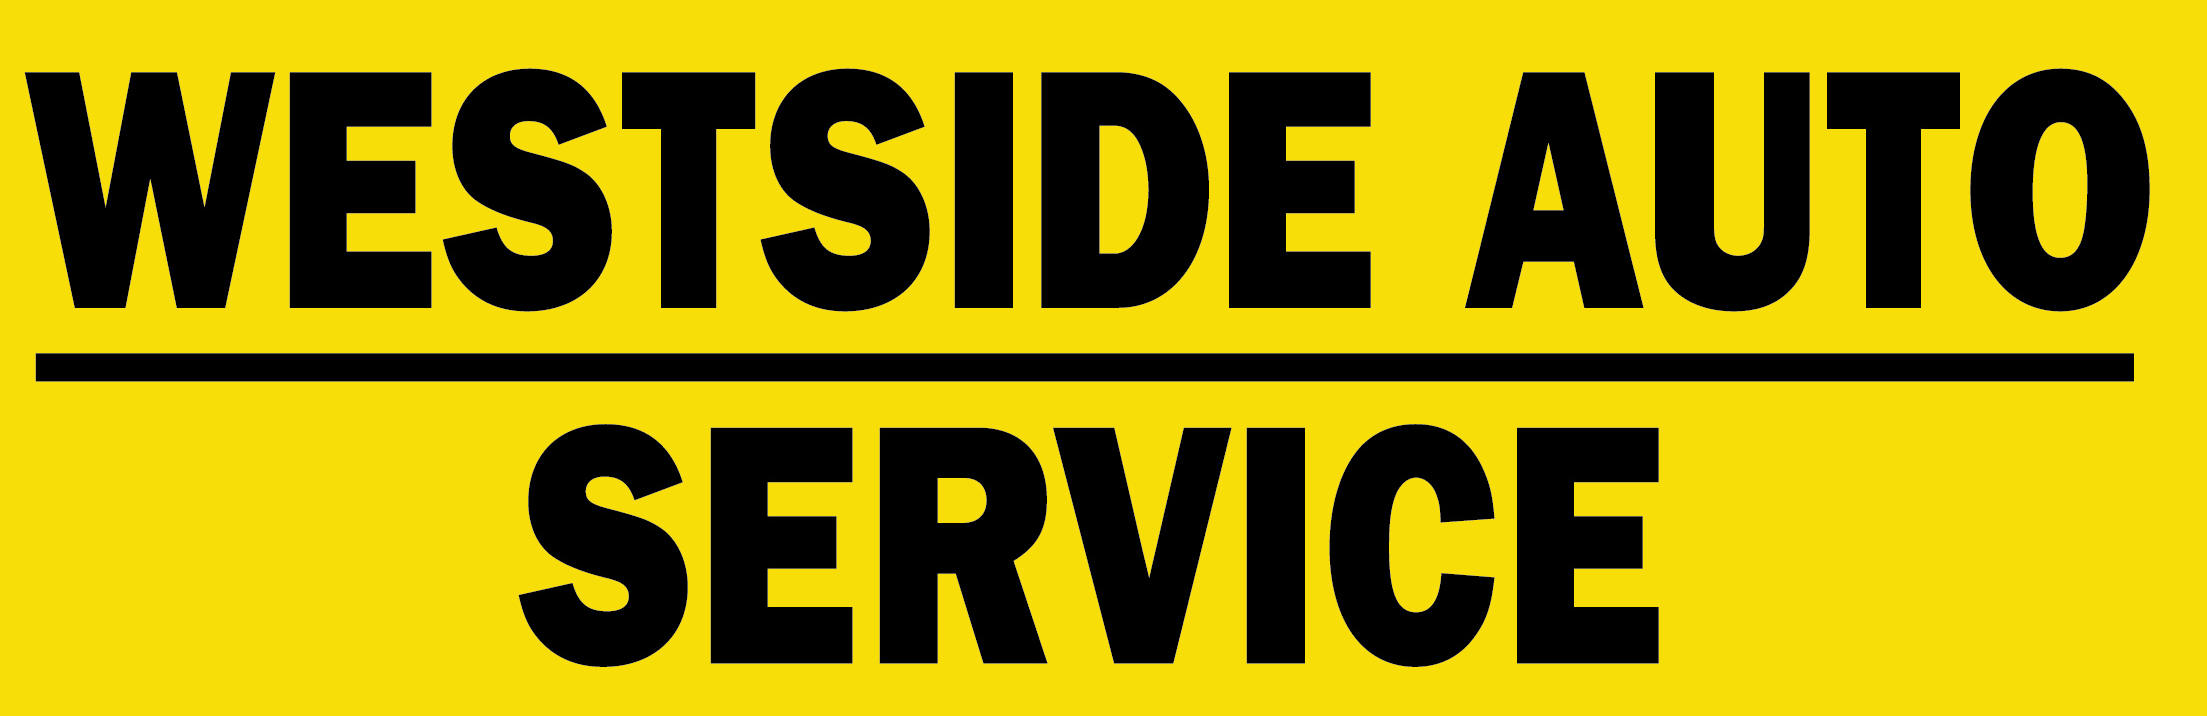 Westside Auto Service